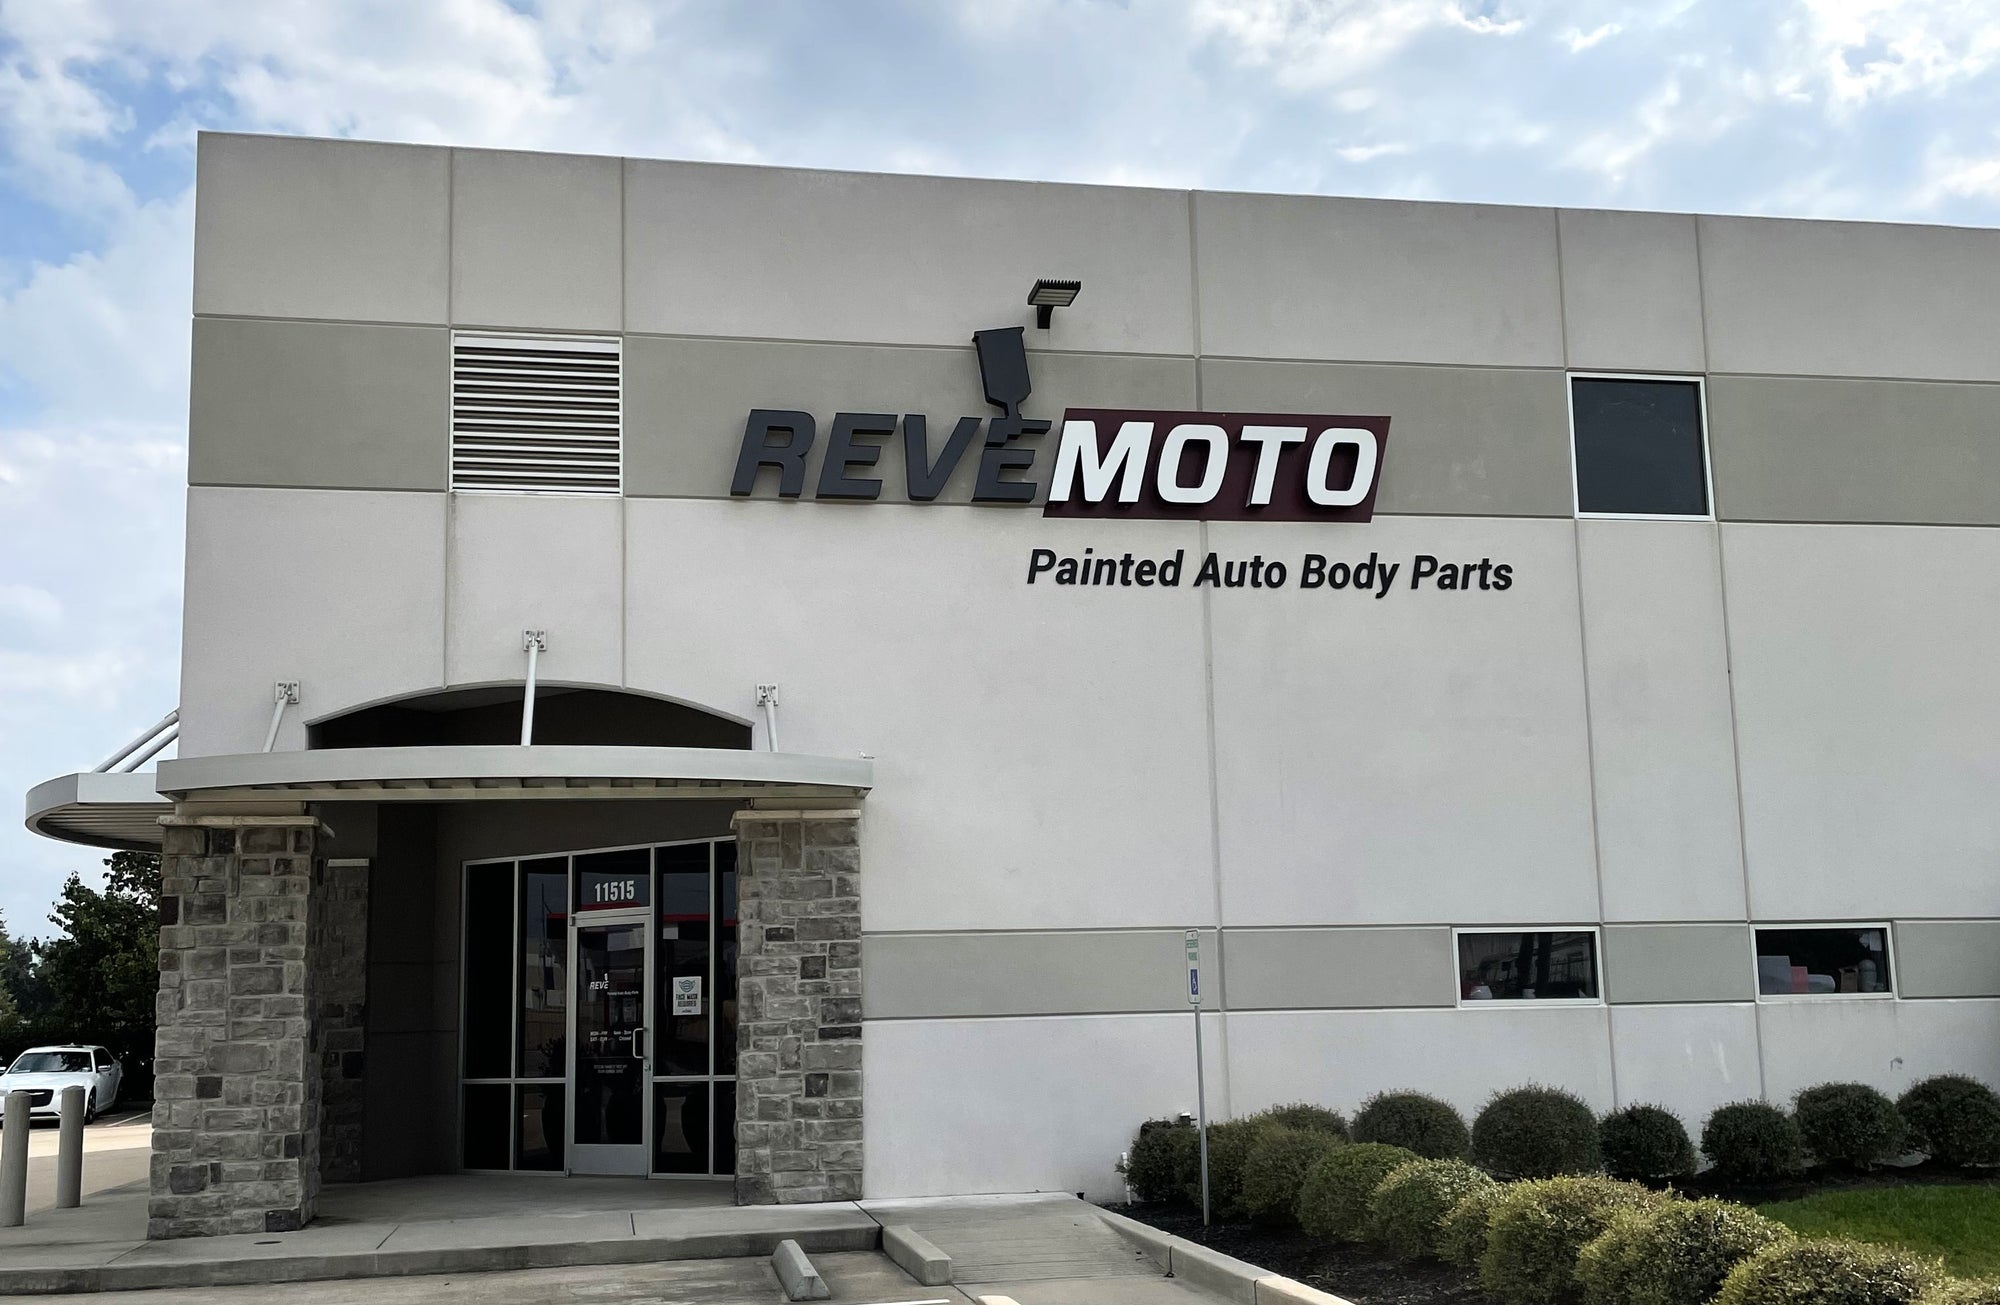 Painted Auto Body Parts & Replacements - ReveMoto Painted Car Parts